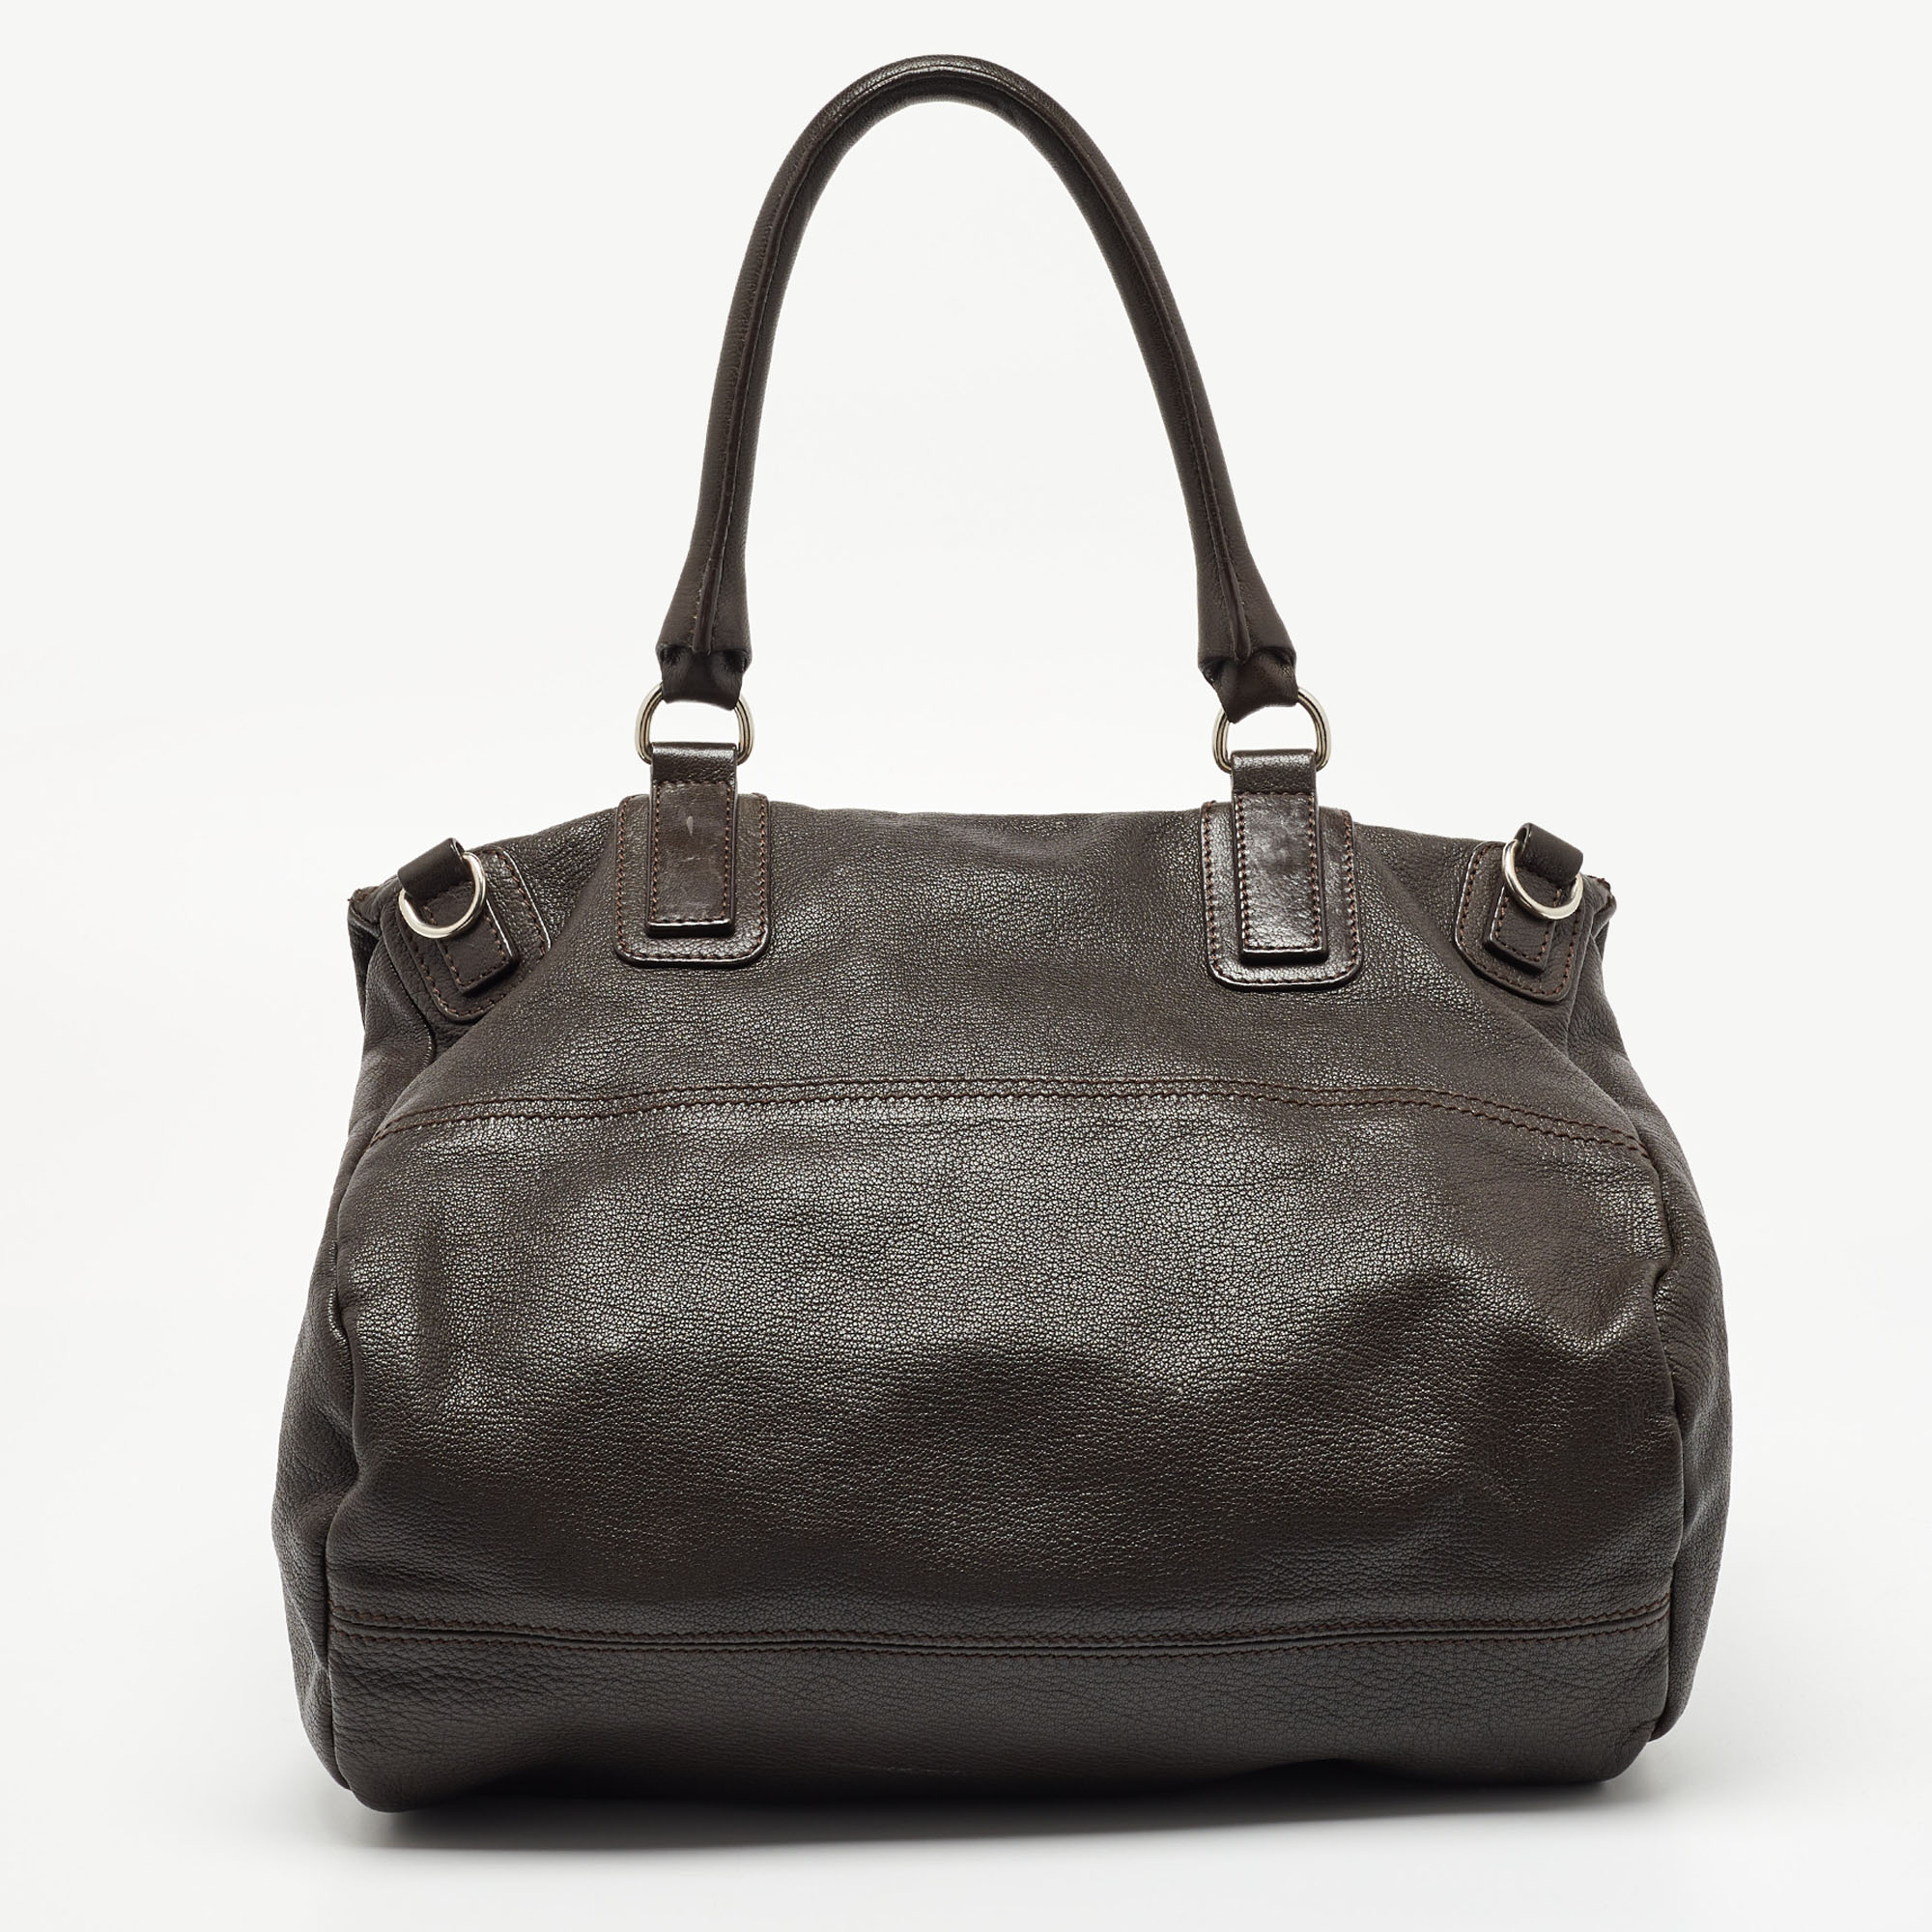 Givenchy Brown Leather Pandora Top Handle Bag